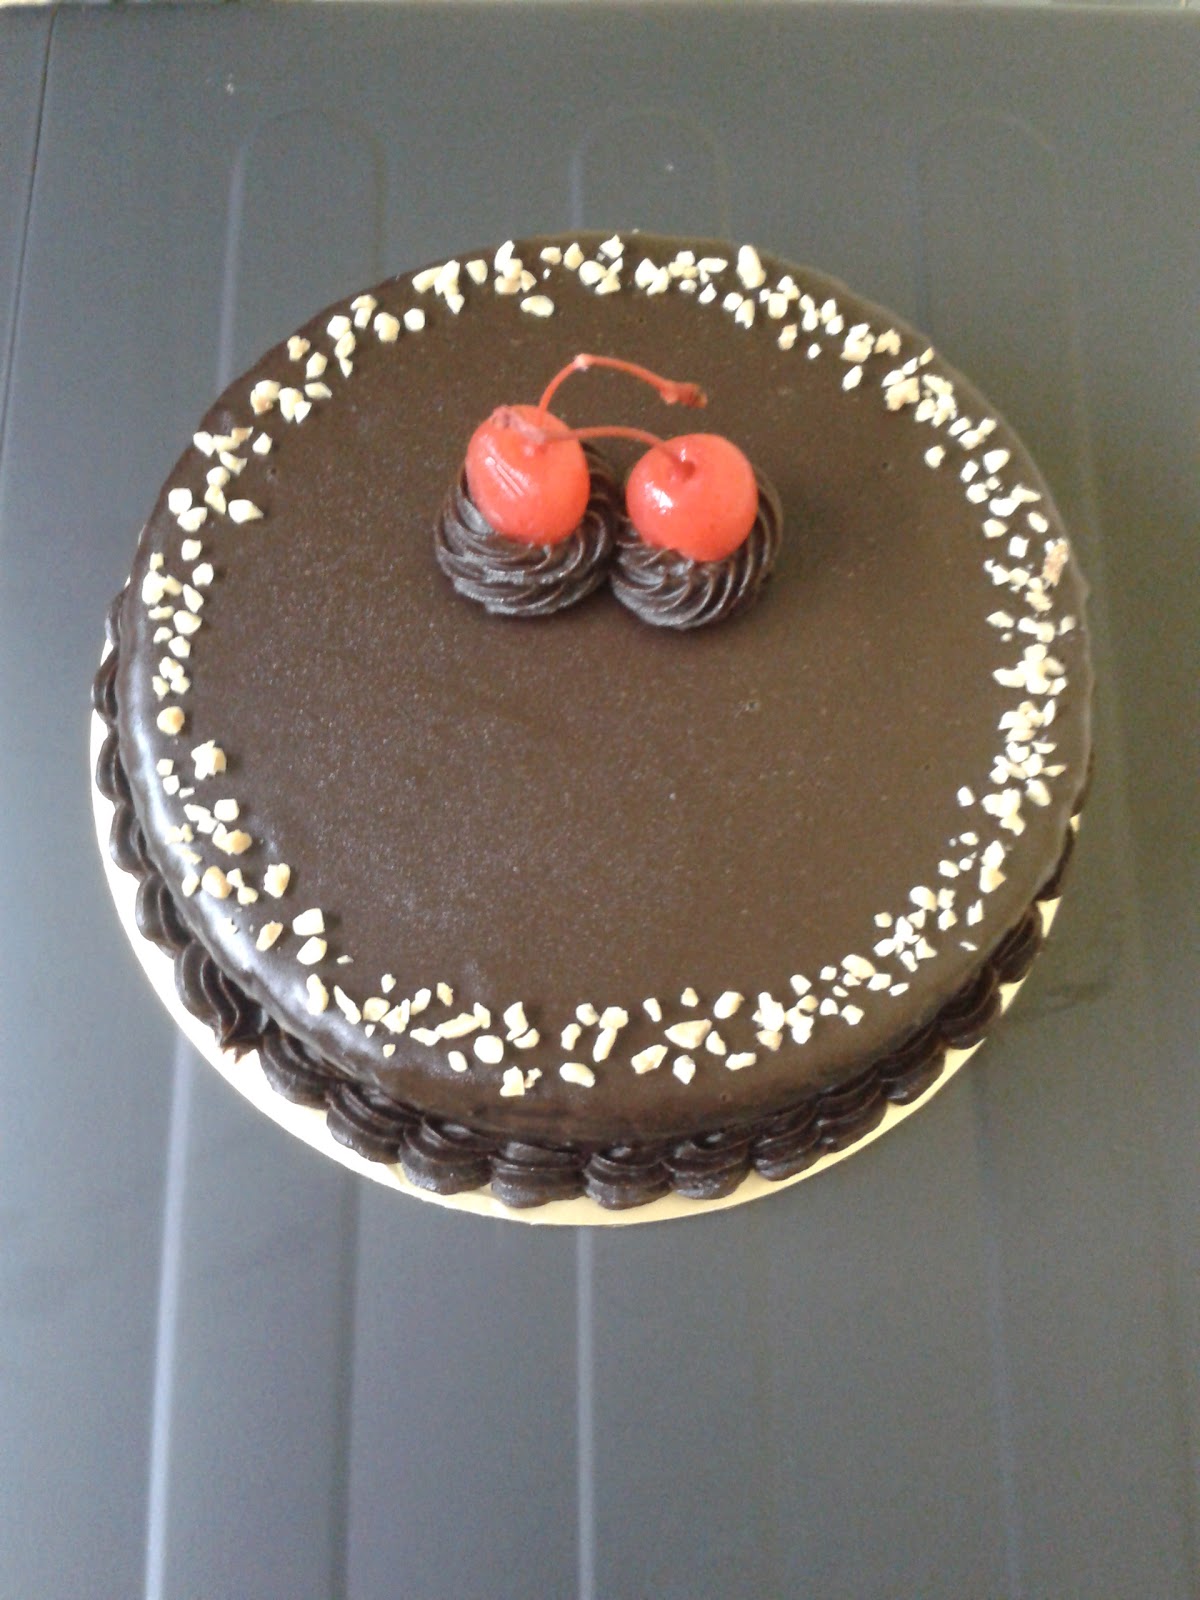 simple chocolate cake decorations CAKES GARDEN